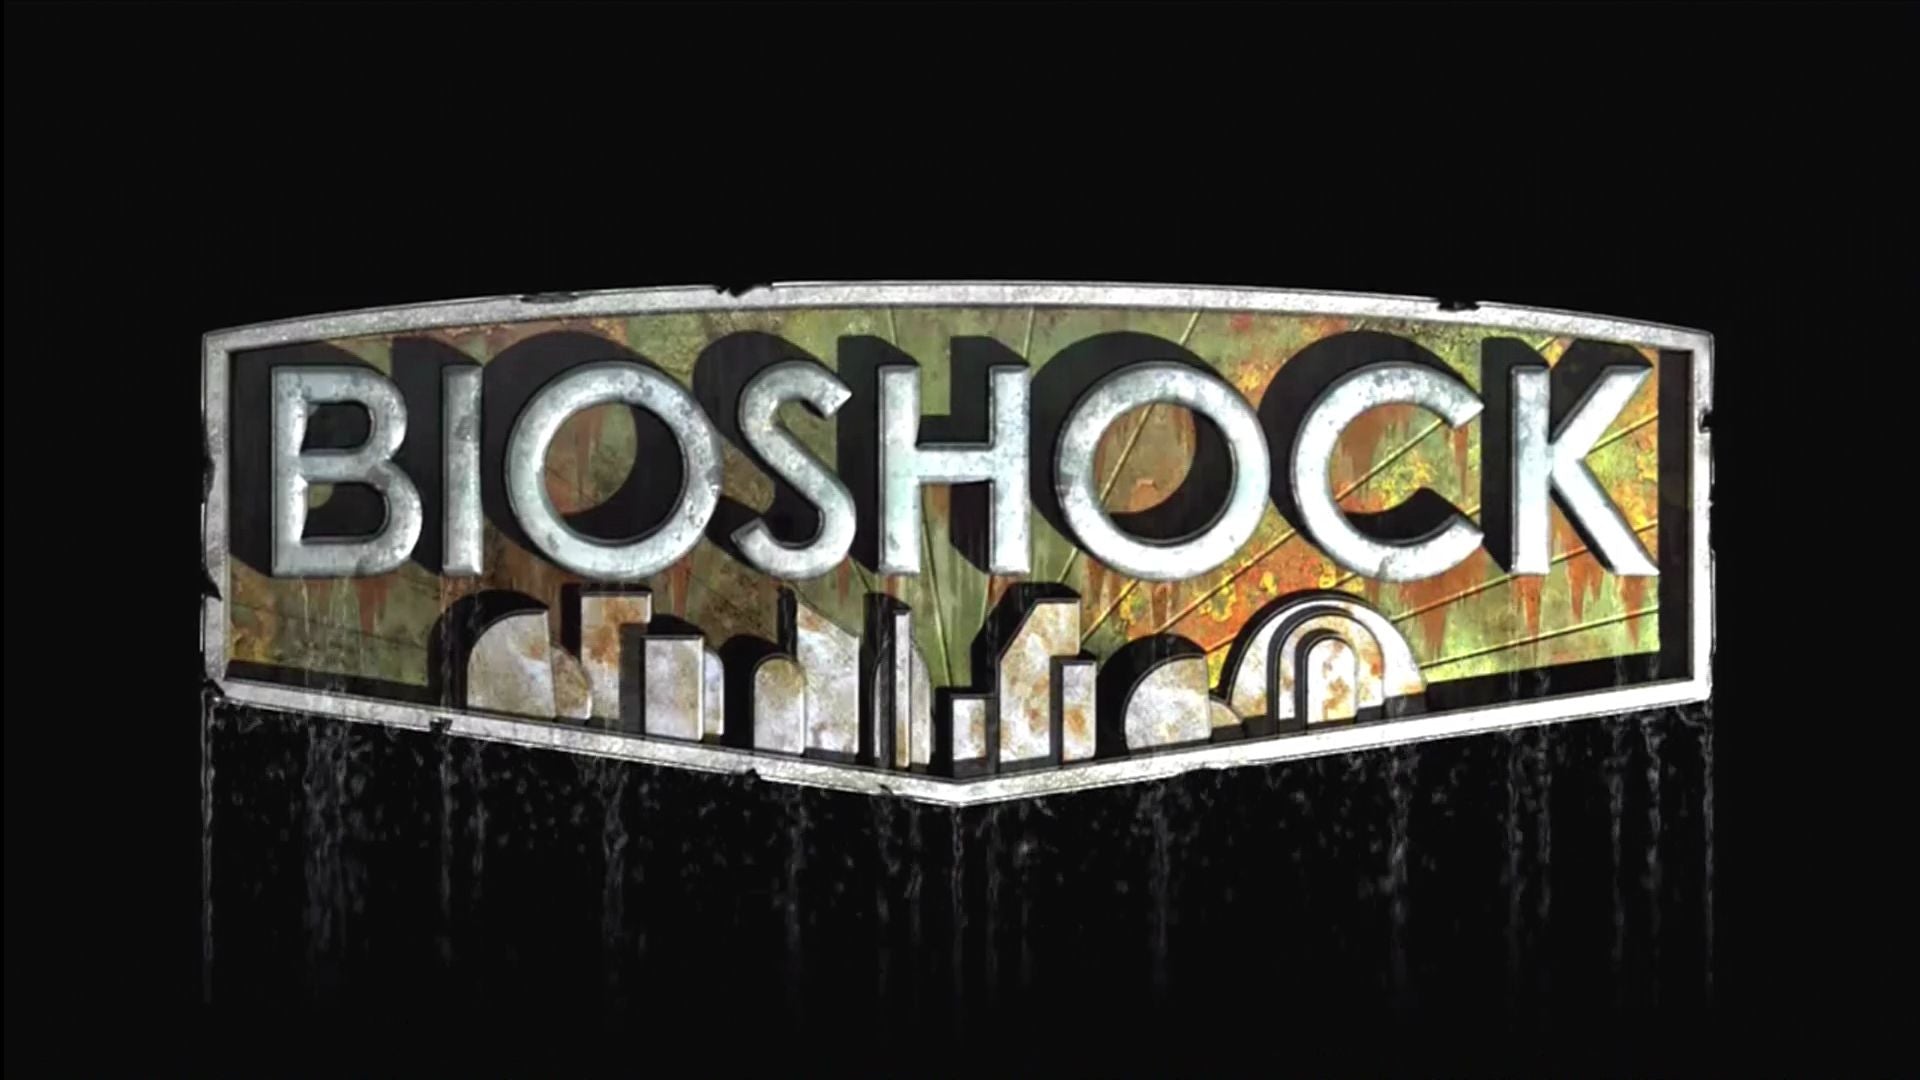 Bioshock - Xbox 360 Game